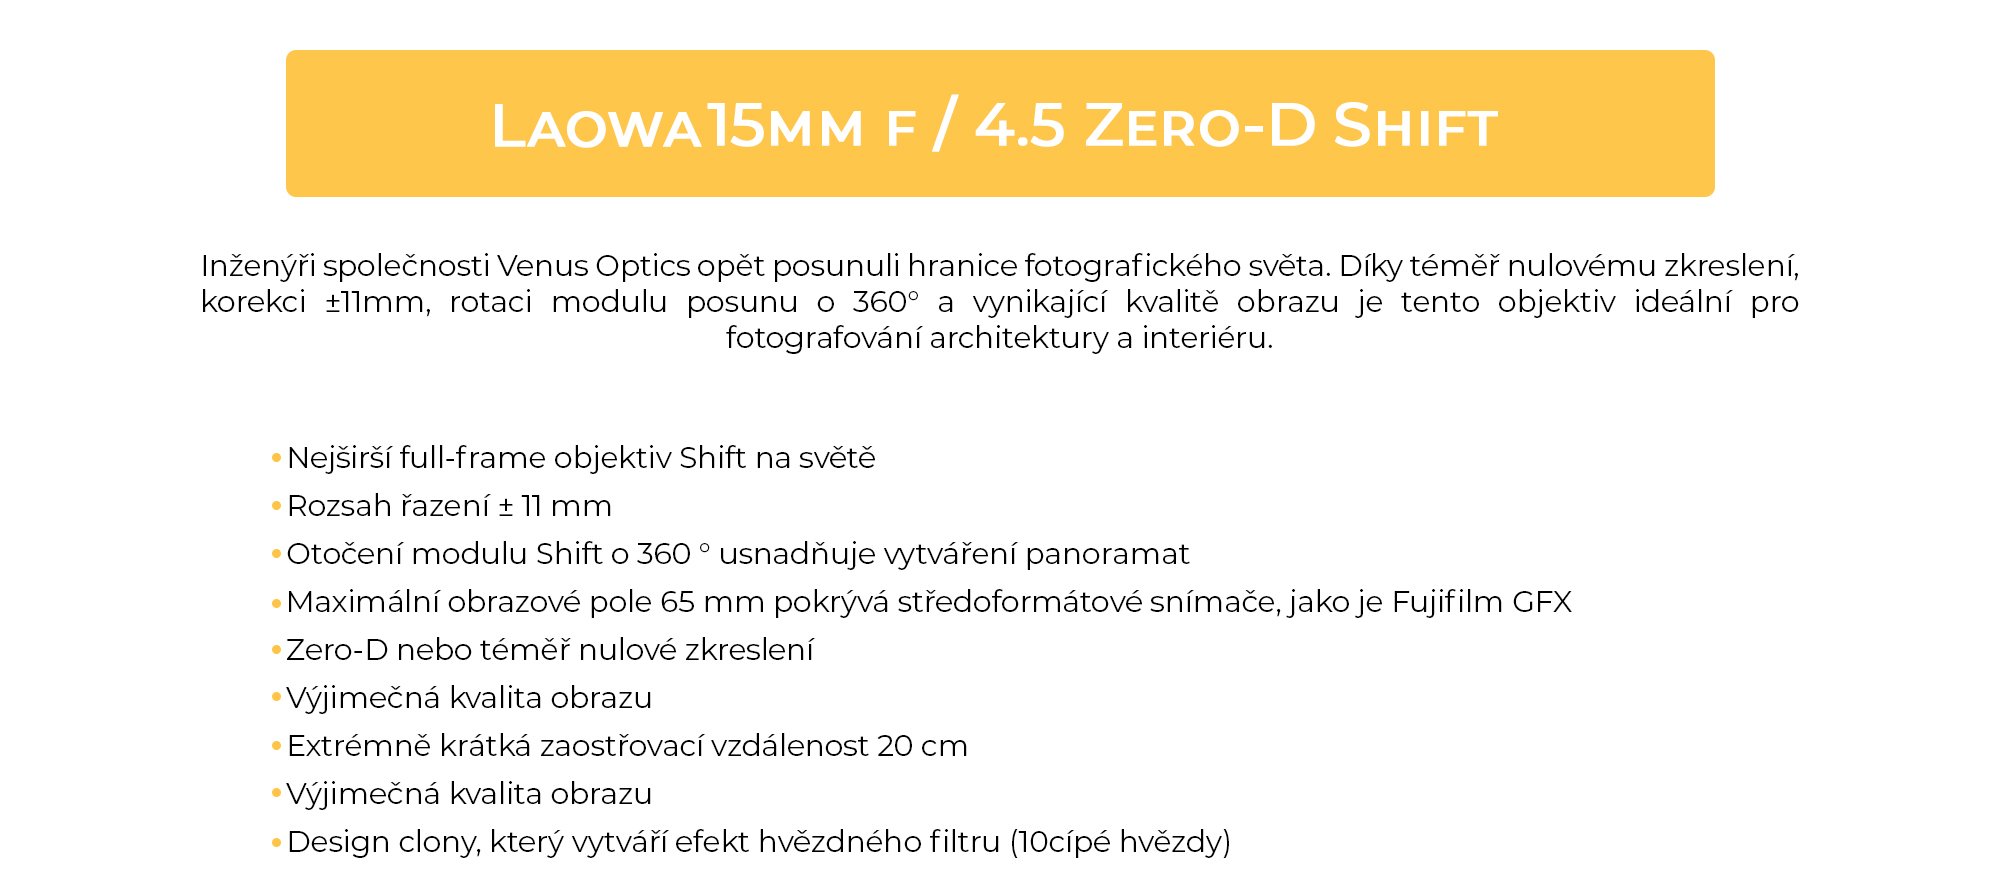 15mm_laowa_zero-D-shift